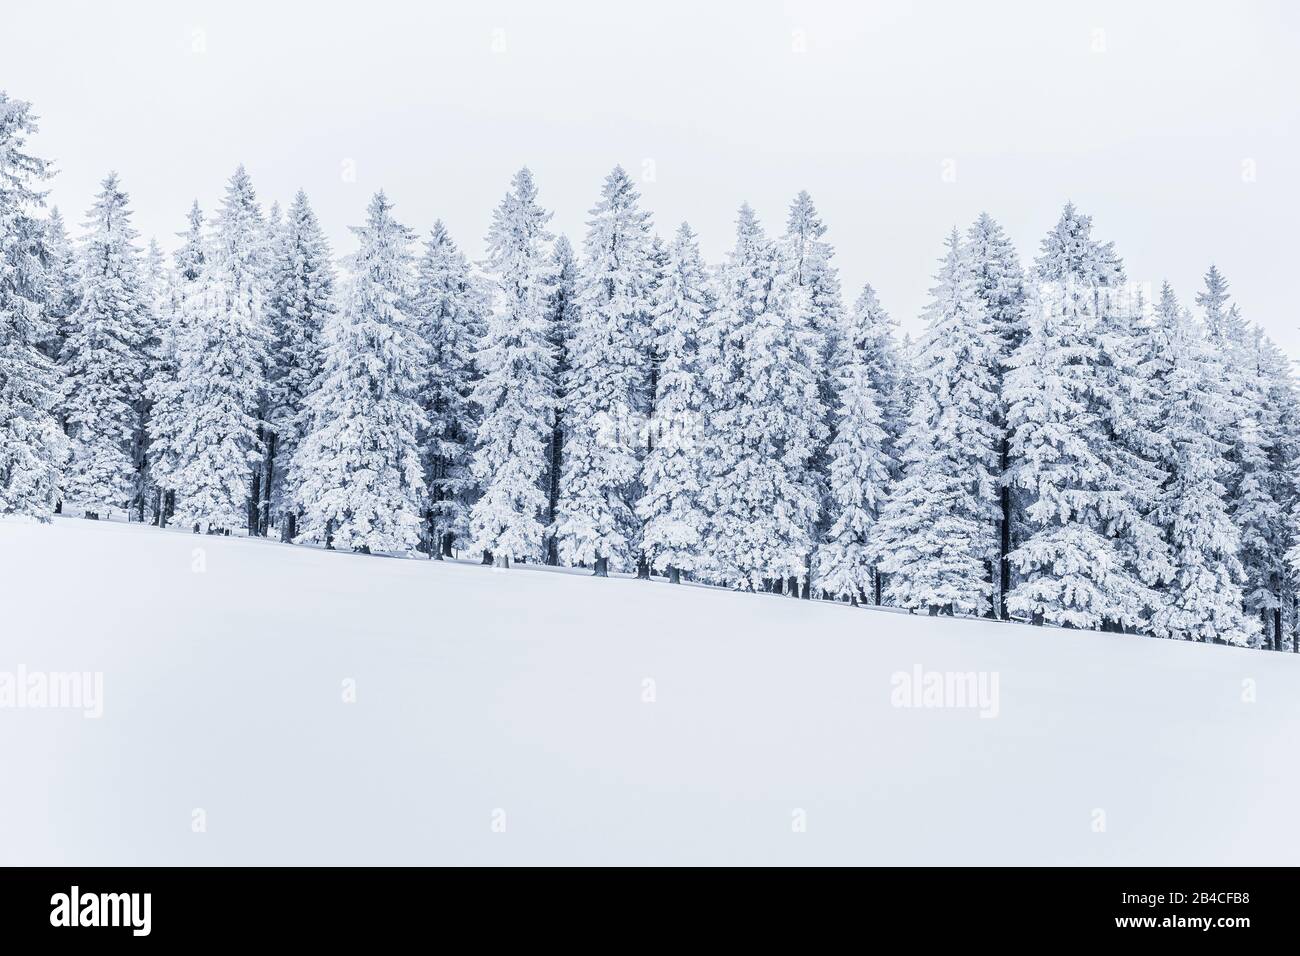 Snowy fir trees in winter Stock Photo